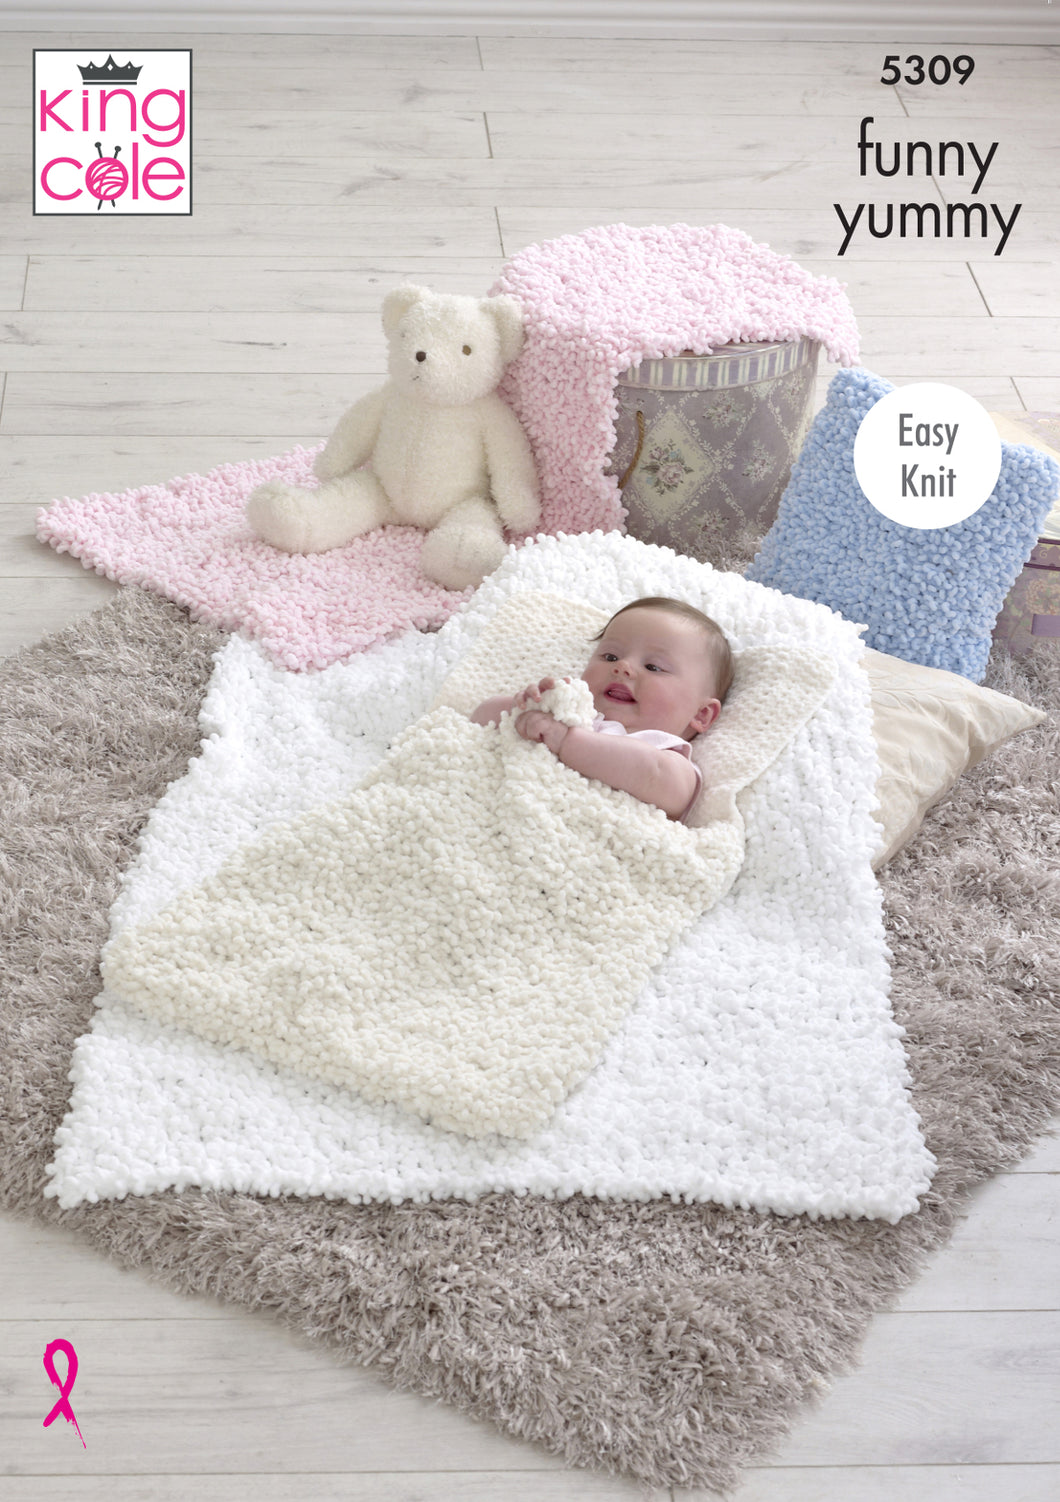 King Cole Funny Yummy Knitting Pattern - Baby Blankets & Sleeping Bag (5309)